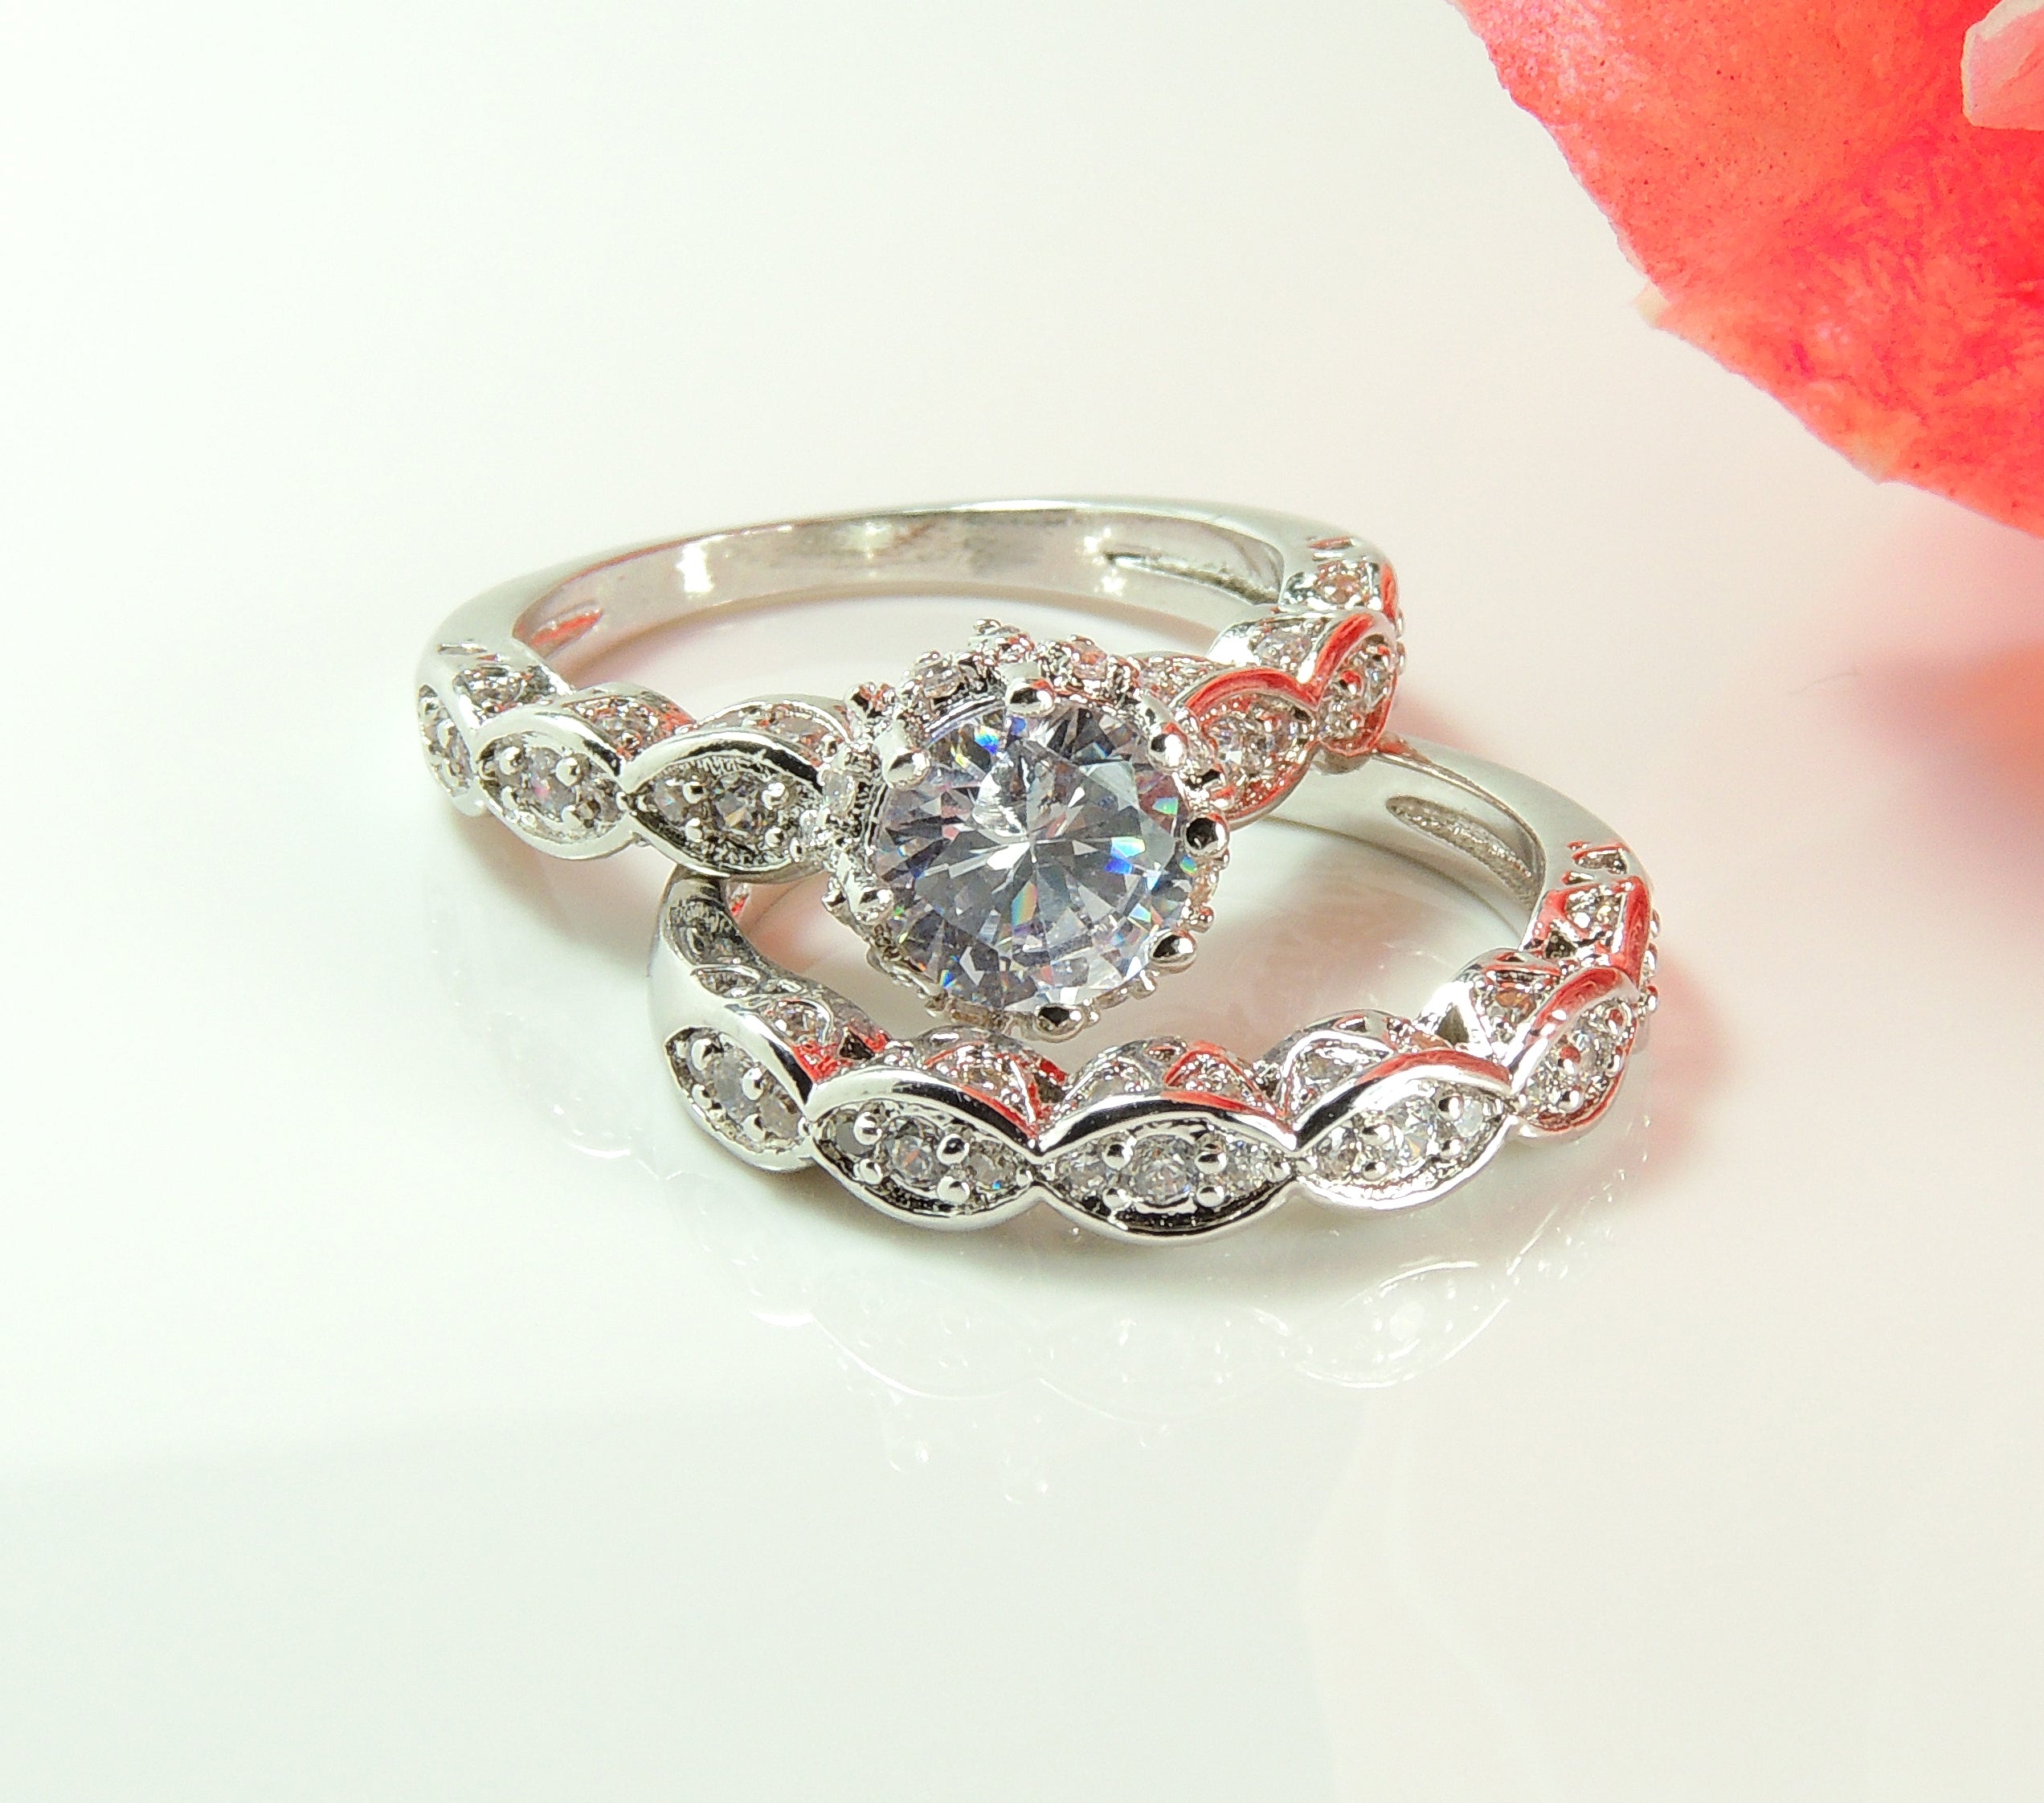 Nickie Bridal Set Engagement Ring Wedding Band Cz Womens Ginger Lyne Collection - 10